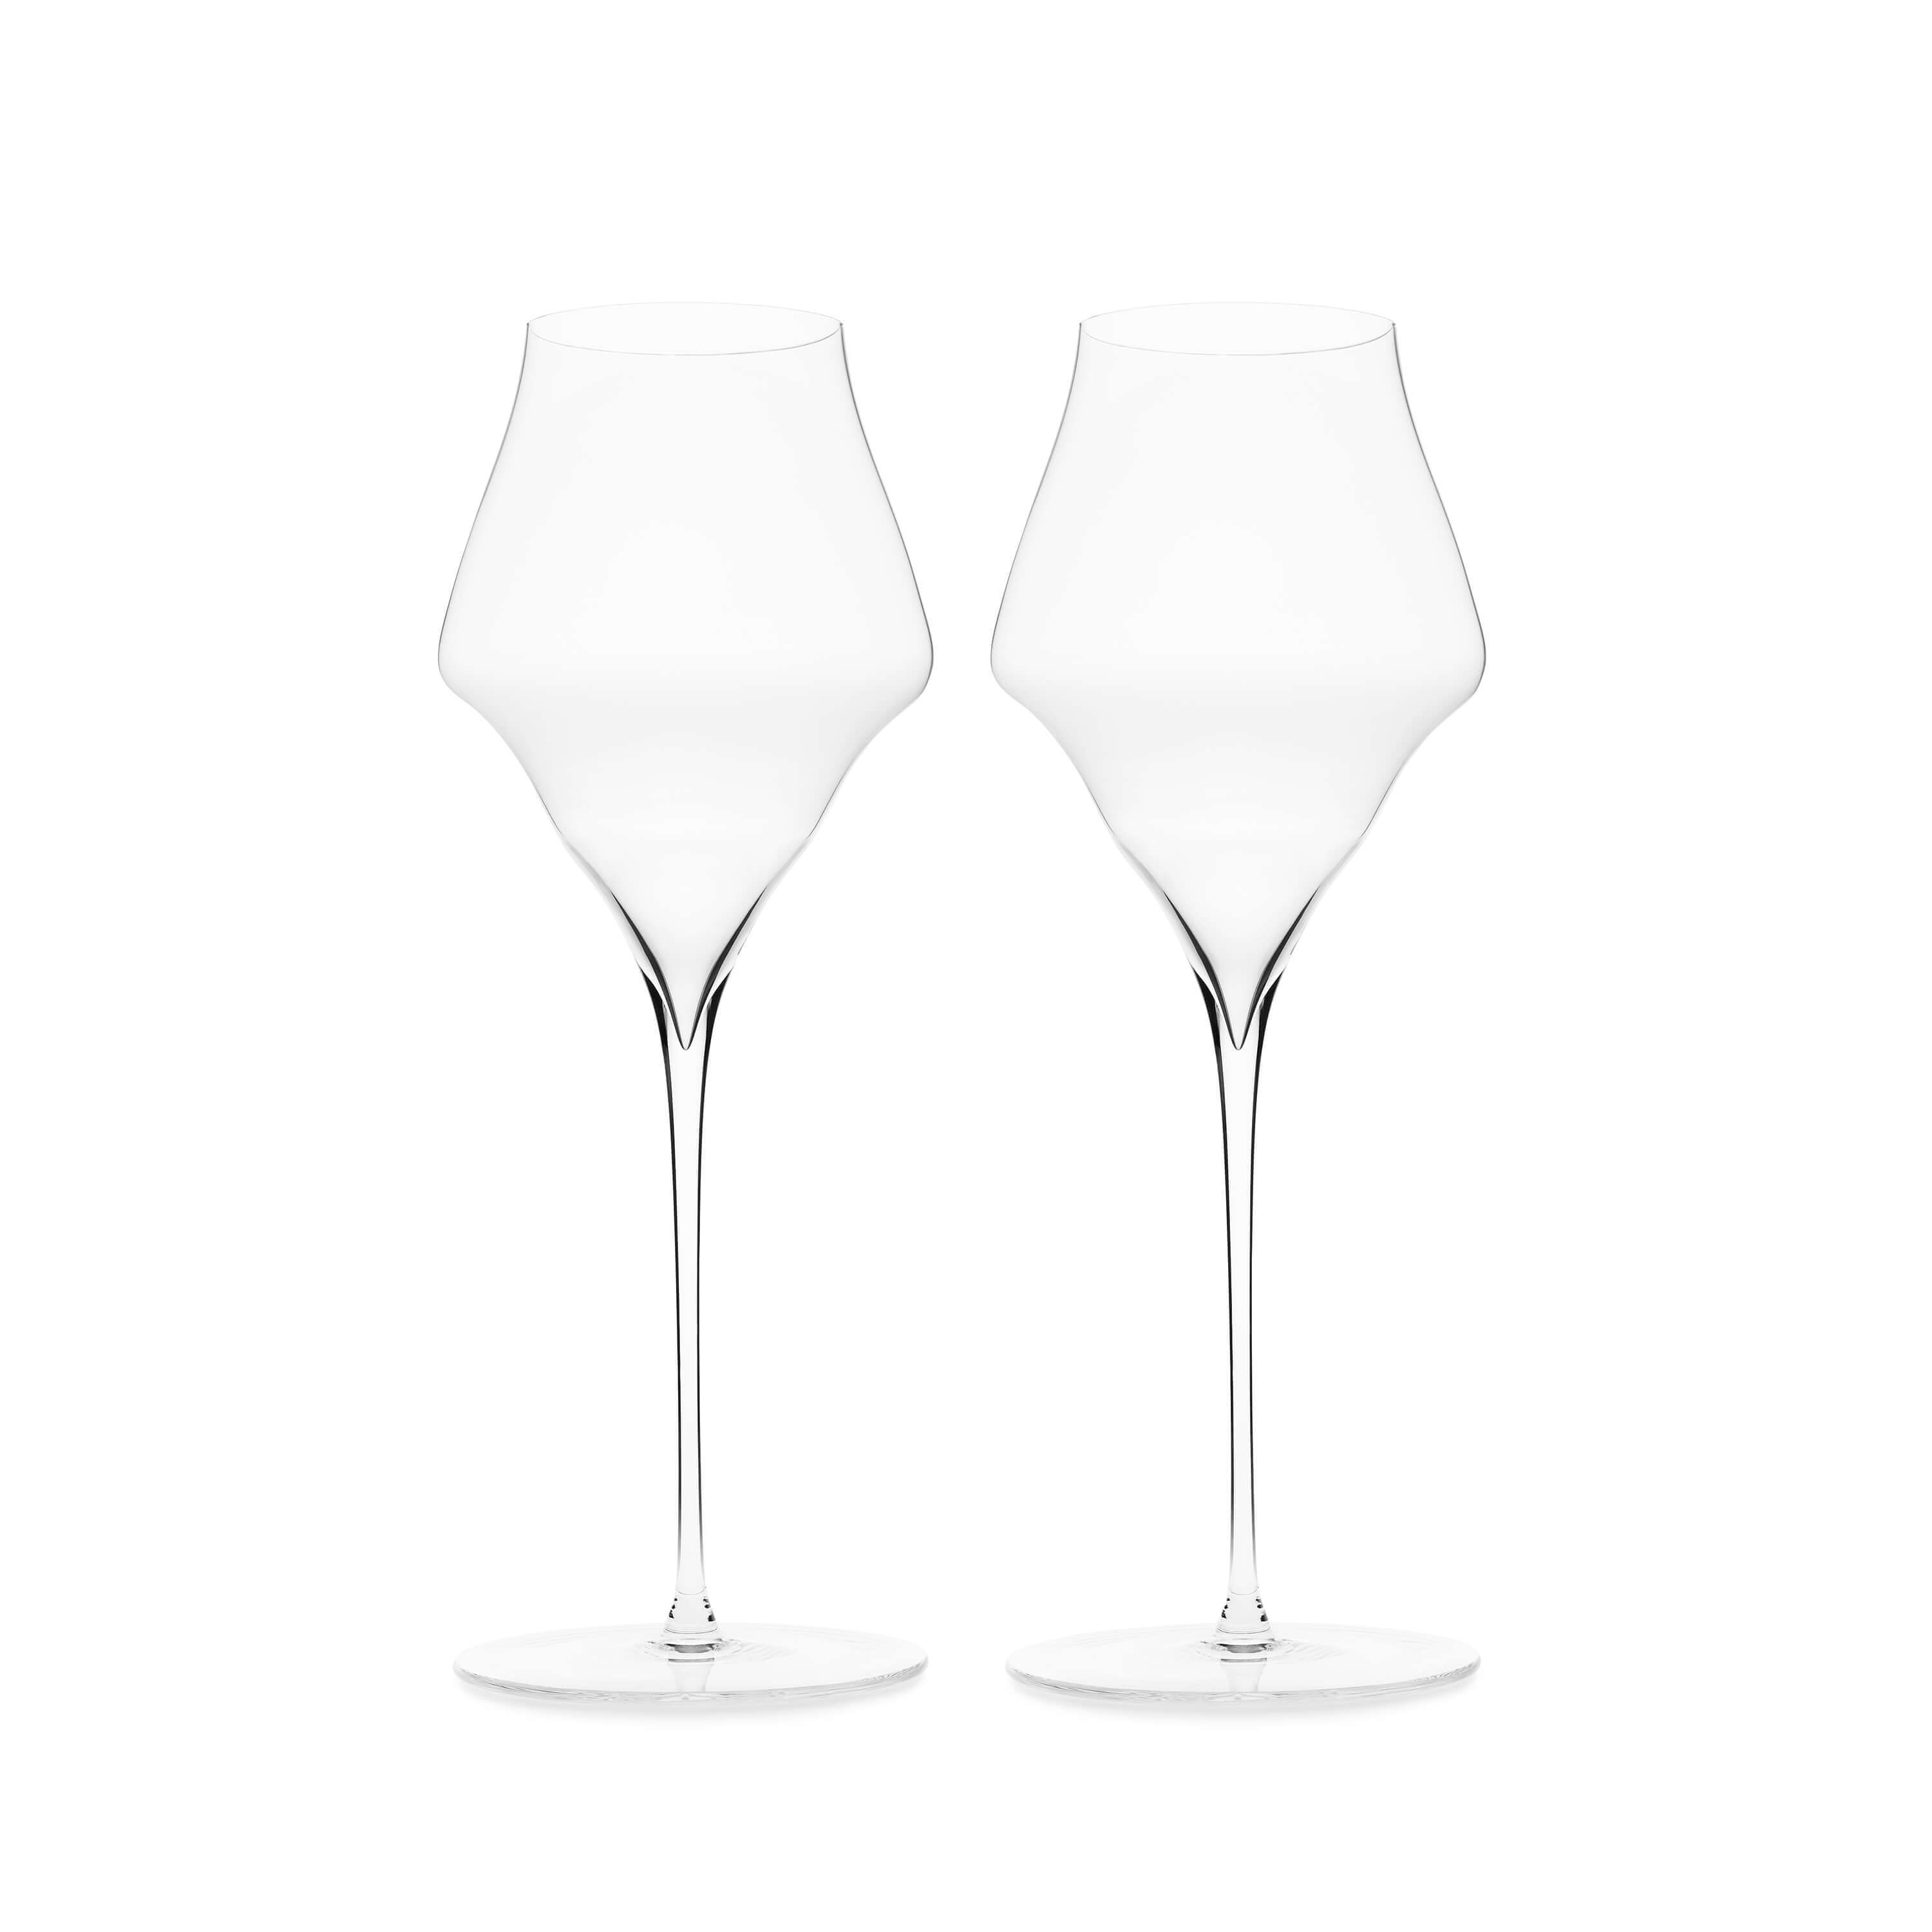 JOSEPHINE No 4 by Josephinenhütte – Champagne glasses #Set of 2 glasses_JOSEPHINE No 4 – Champagne